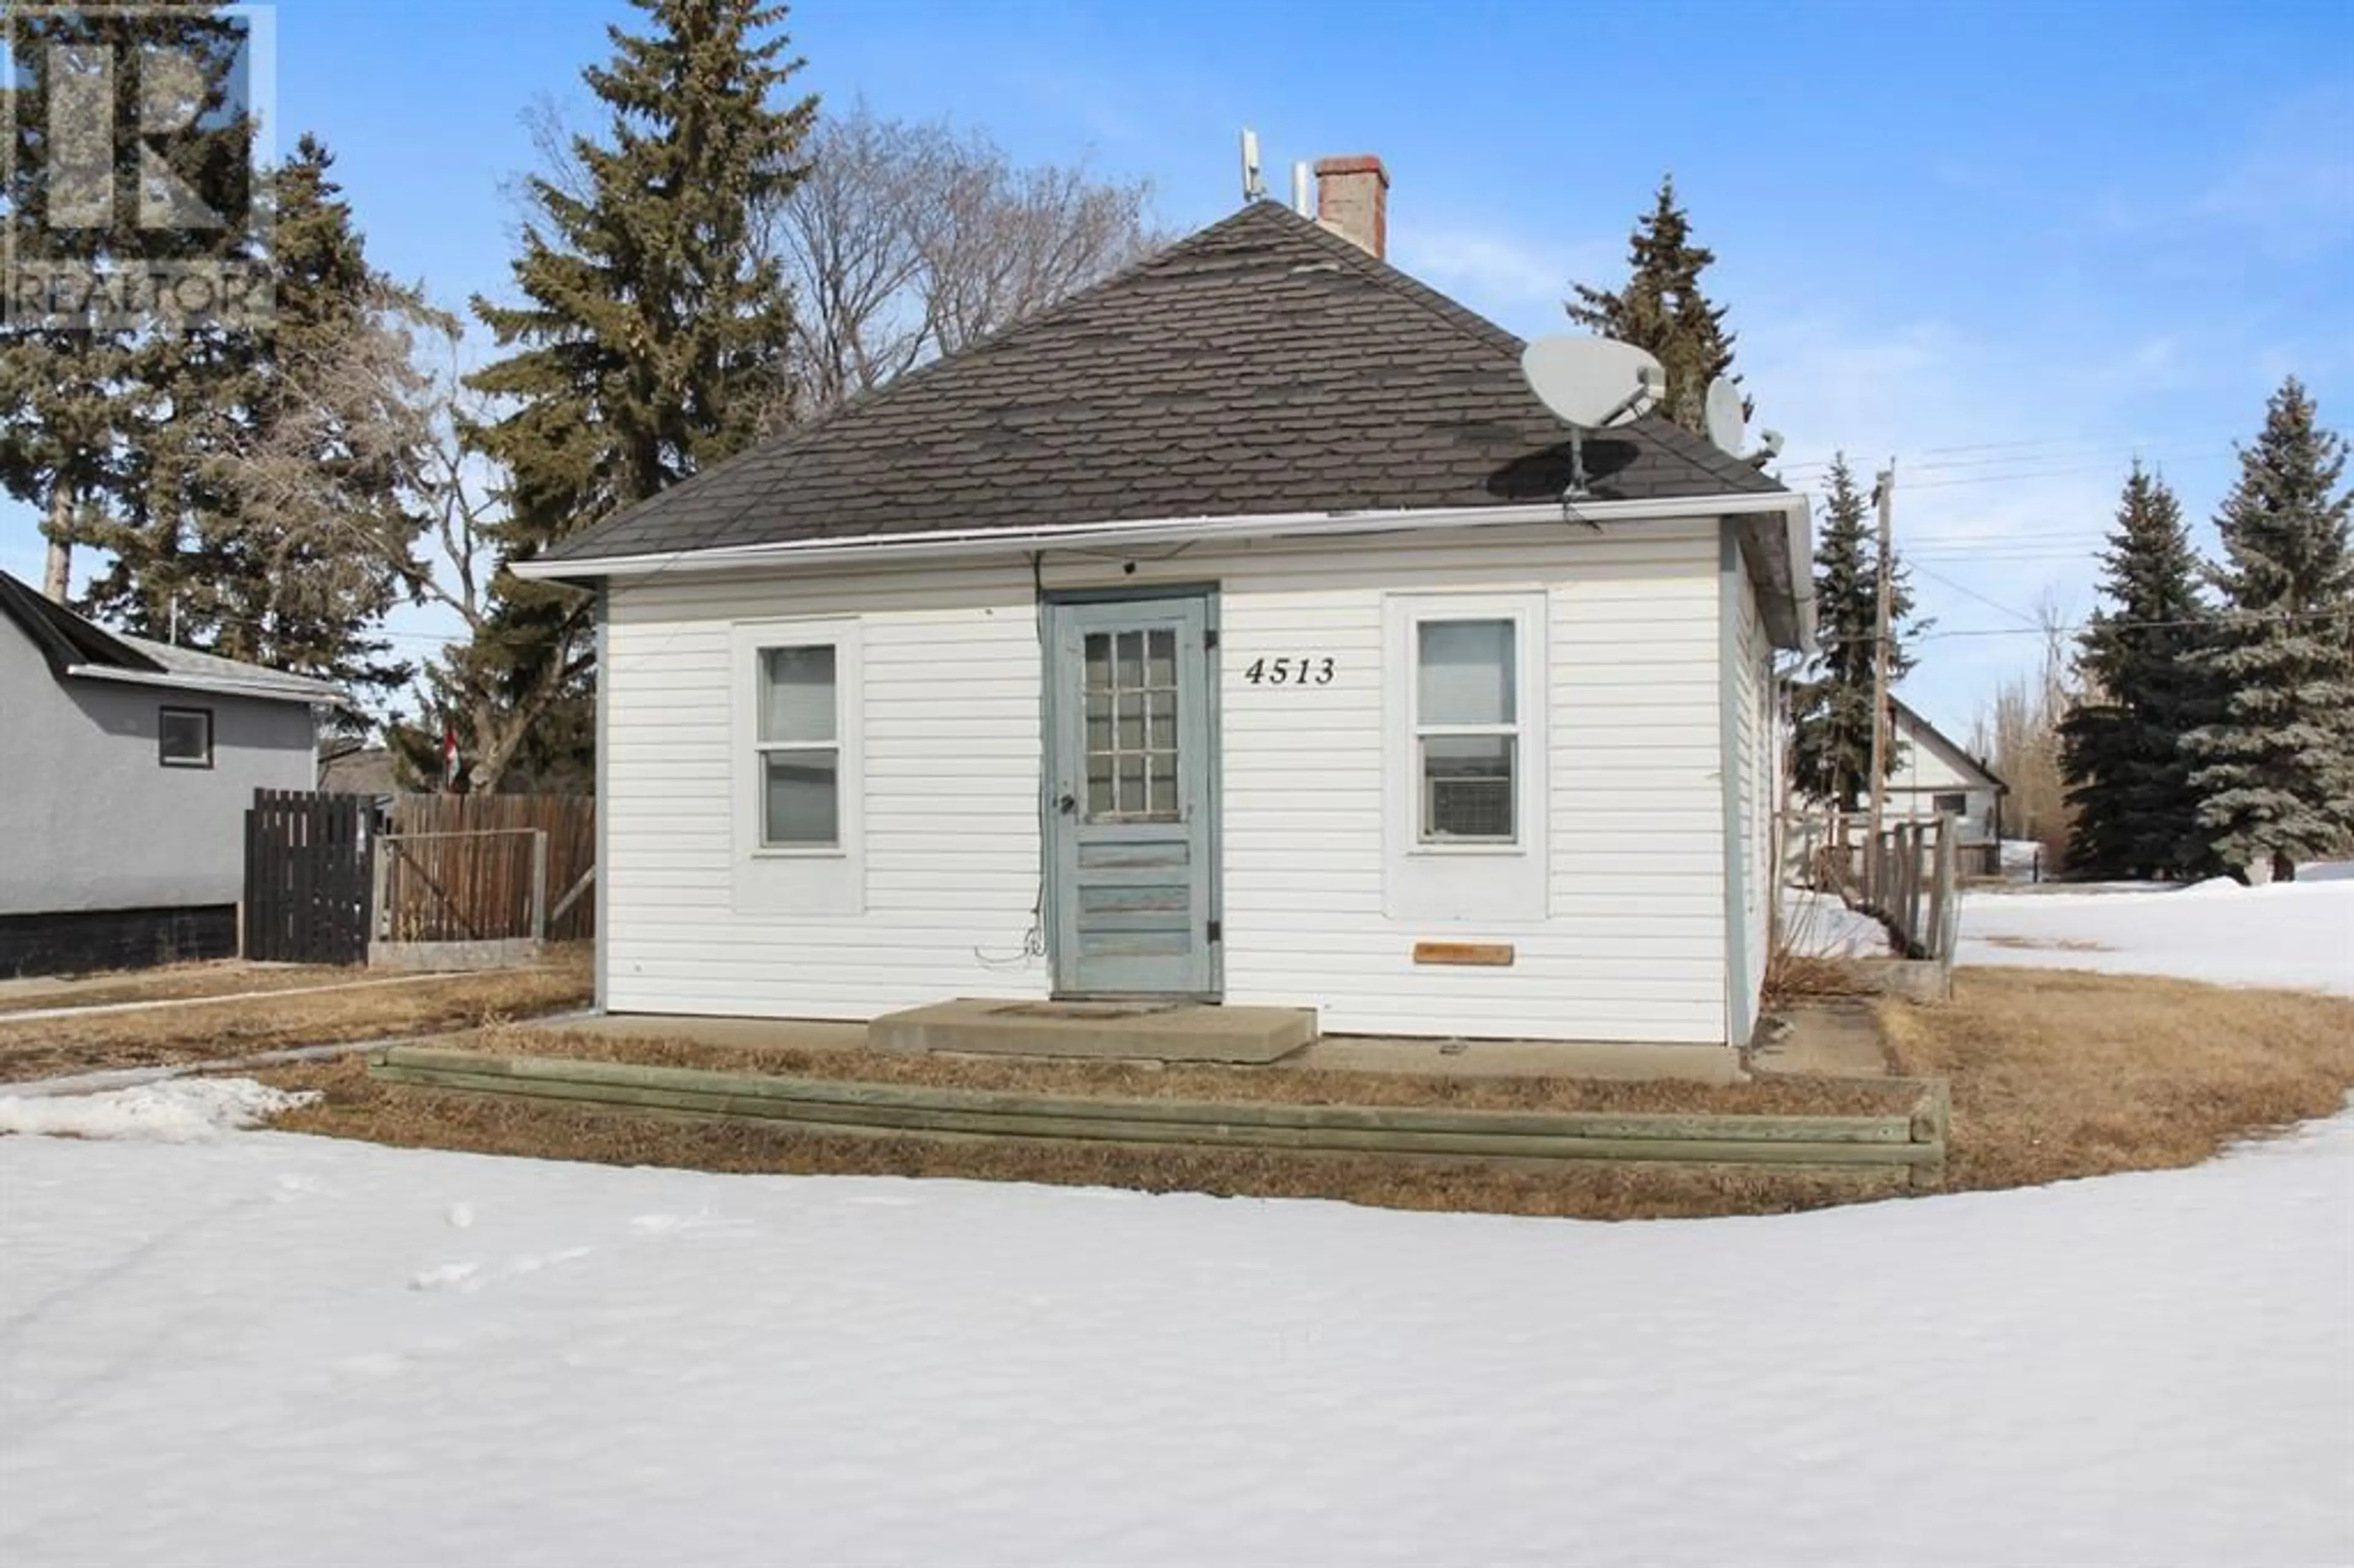 Cottage for 4513 49 Avenue, Castor Alberta T0C0X0